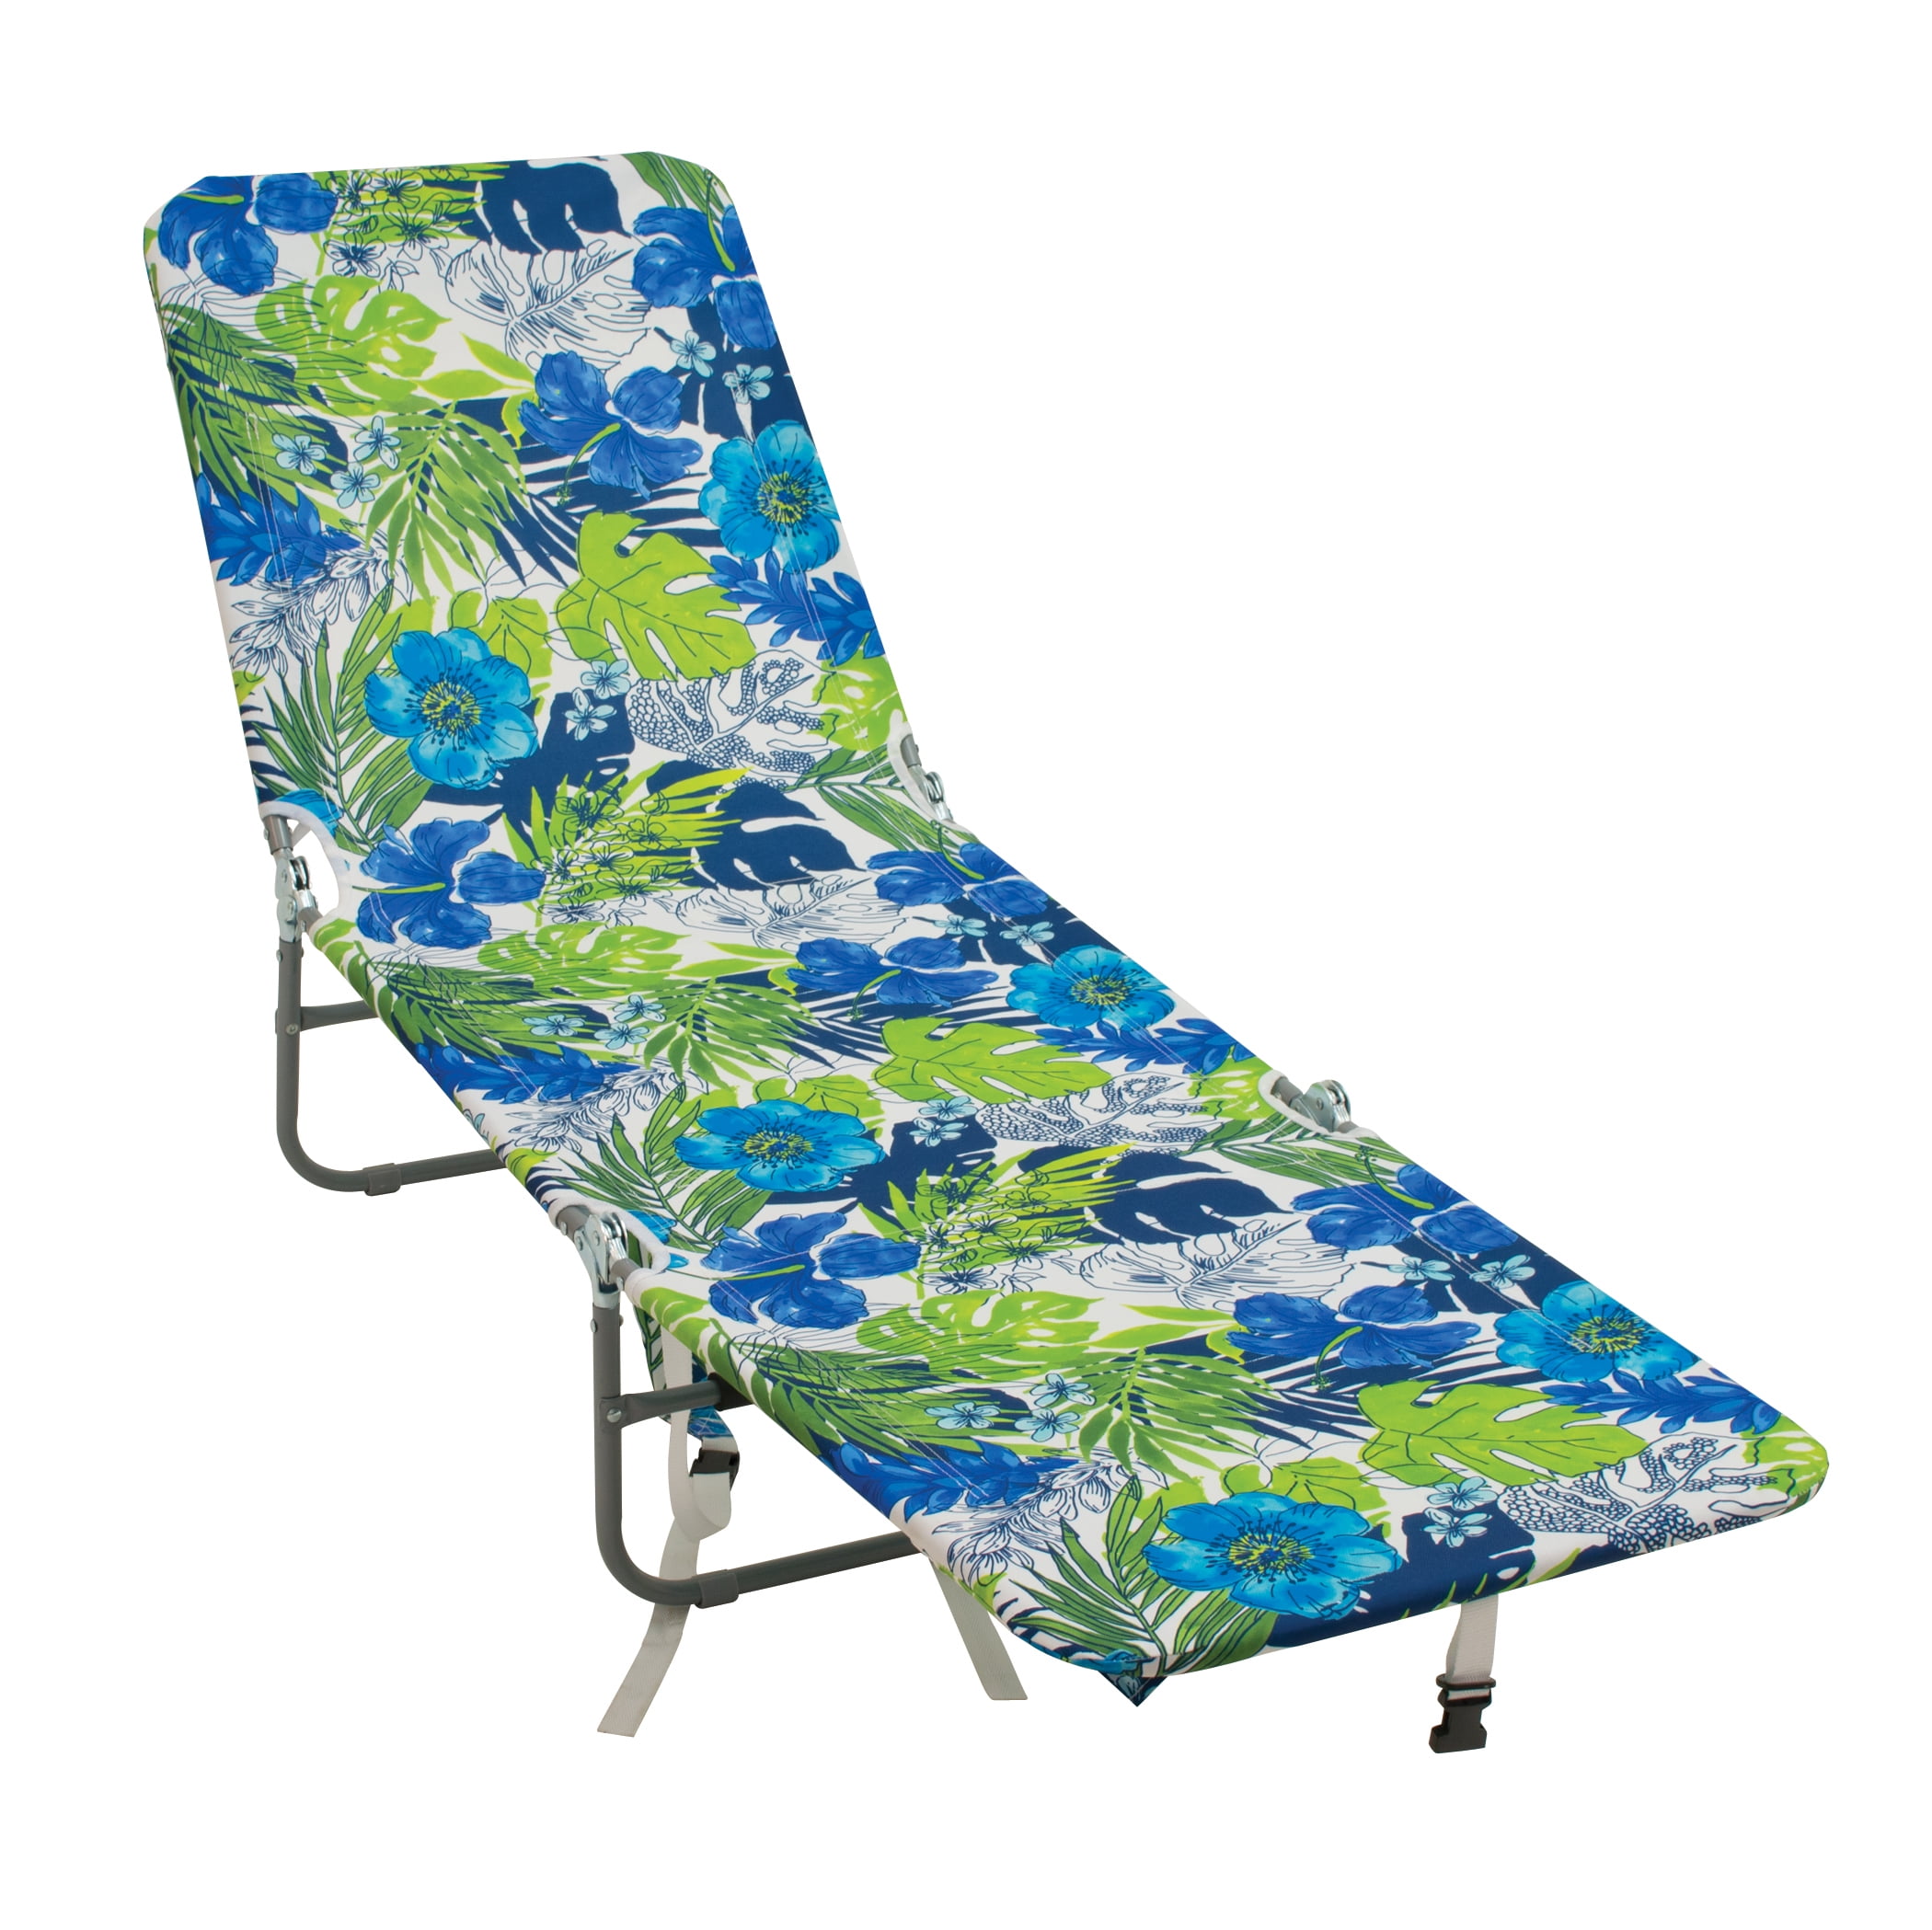 Modern Rio Beach Brazil Chair for Living room